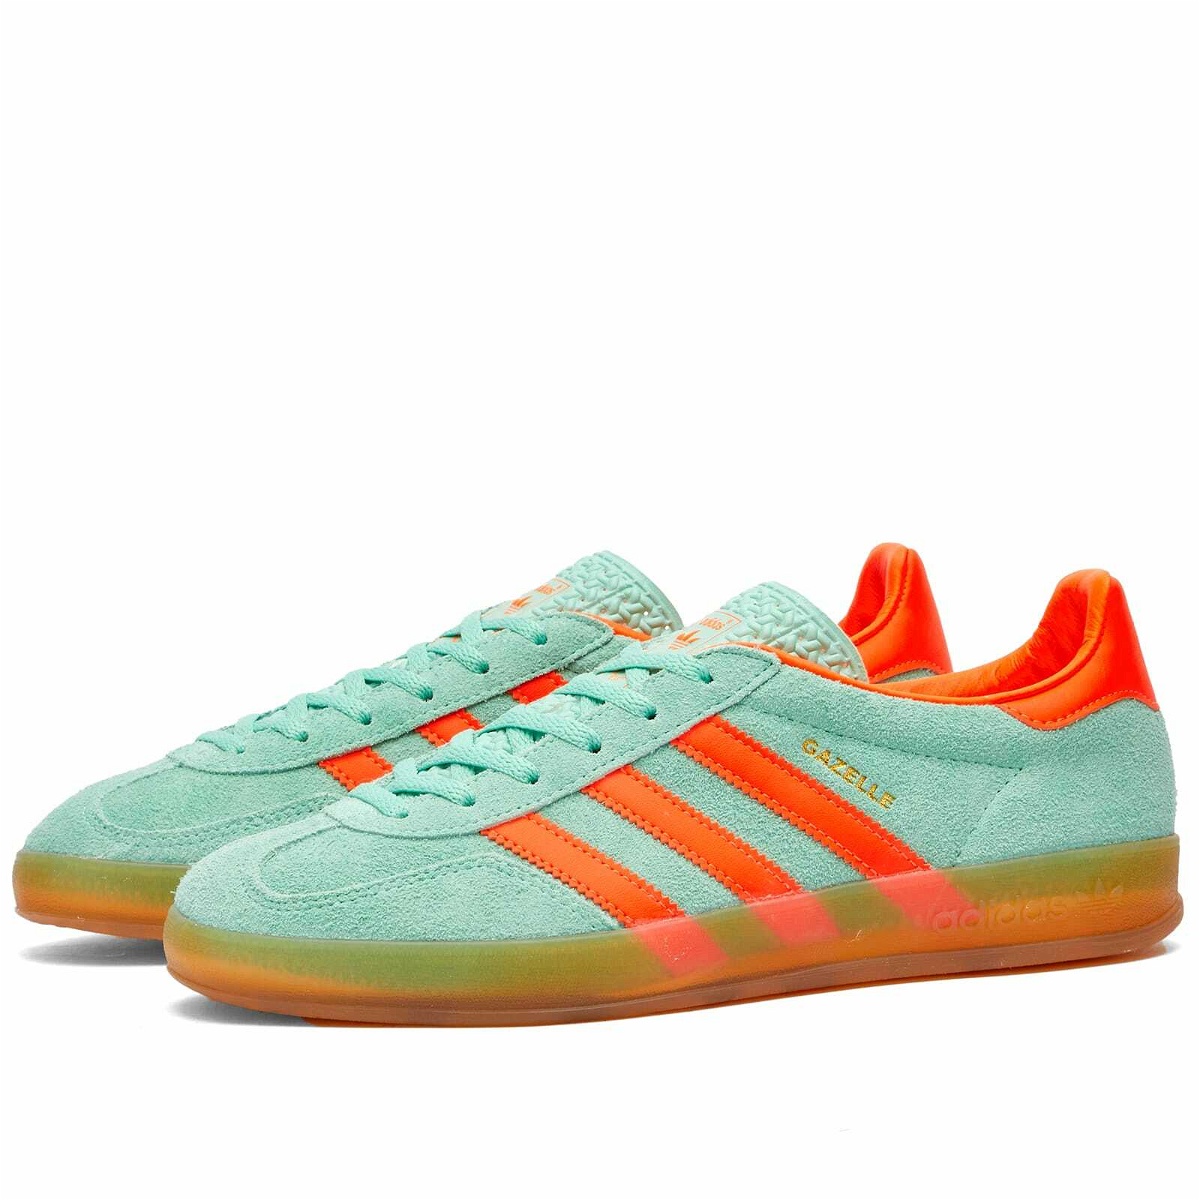 Adidas Gazelle Indoor W adidas Sneakers Mint/Orange in Pulse